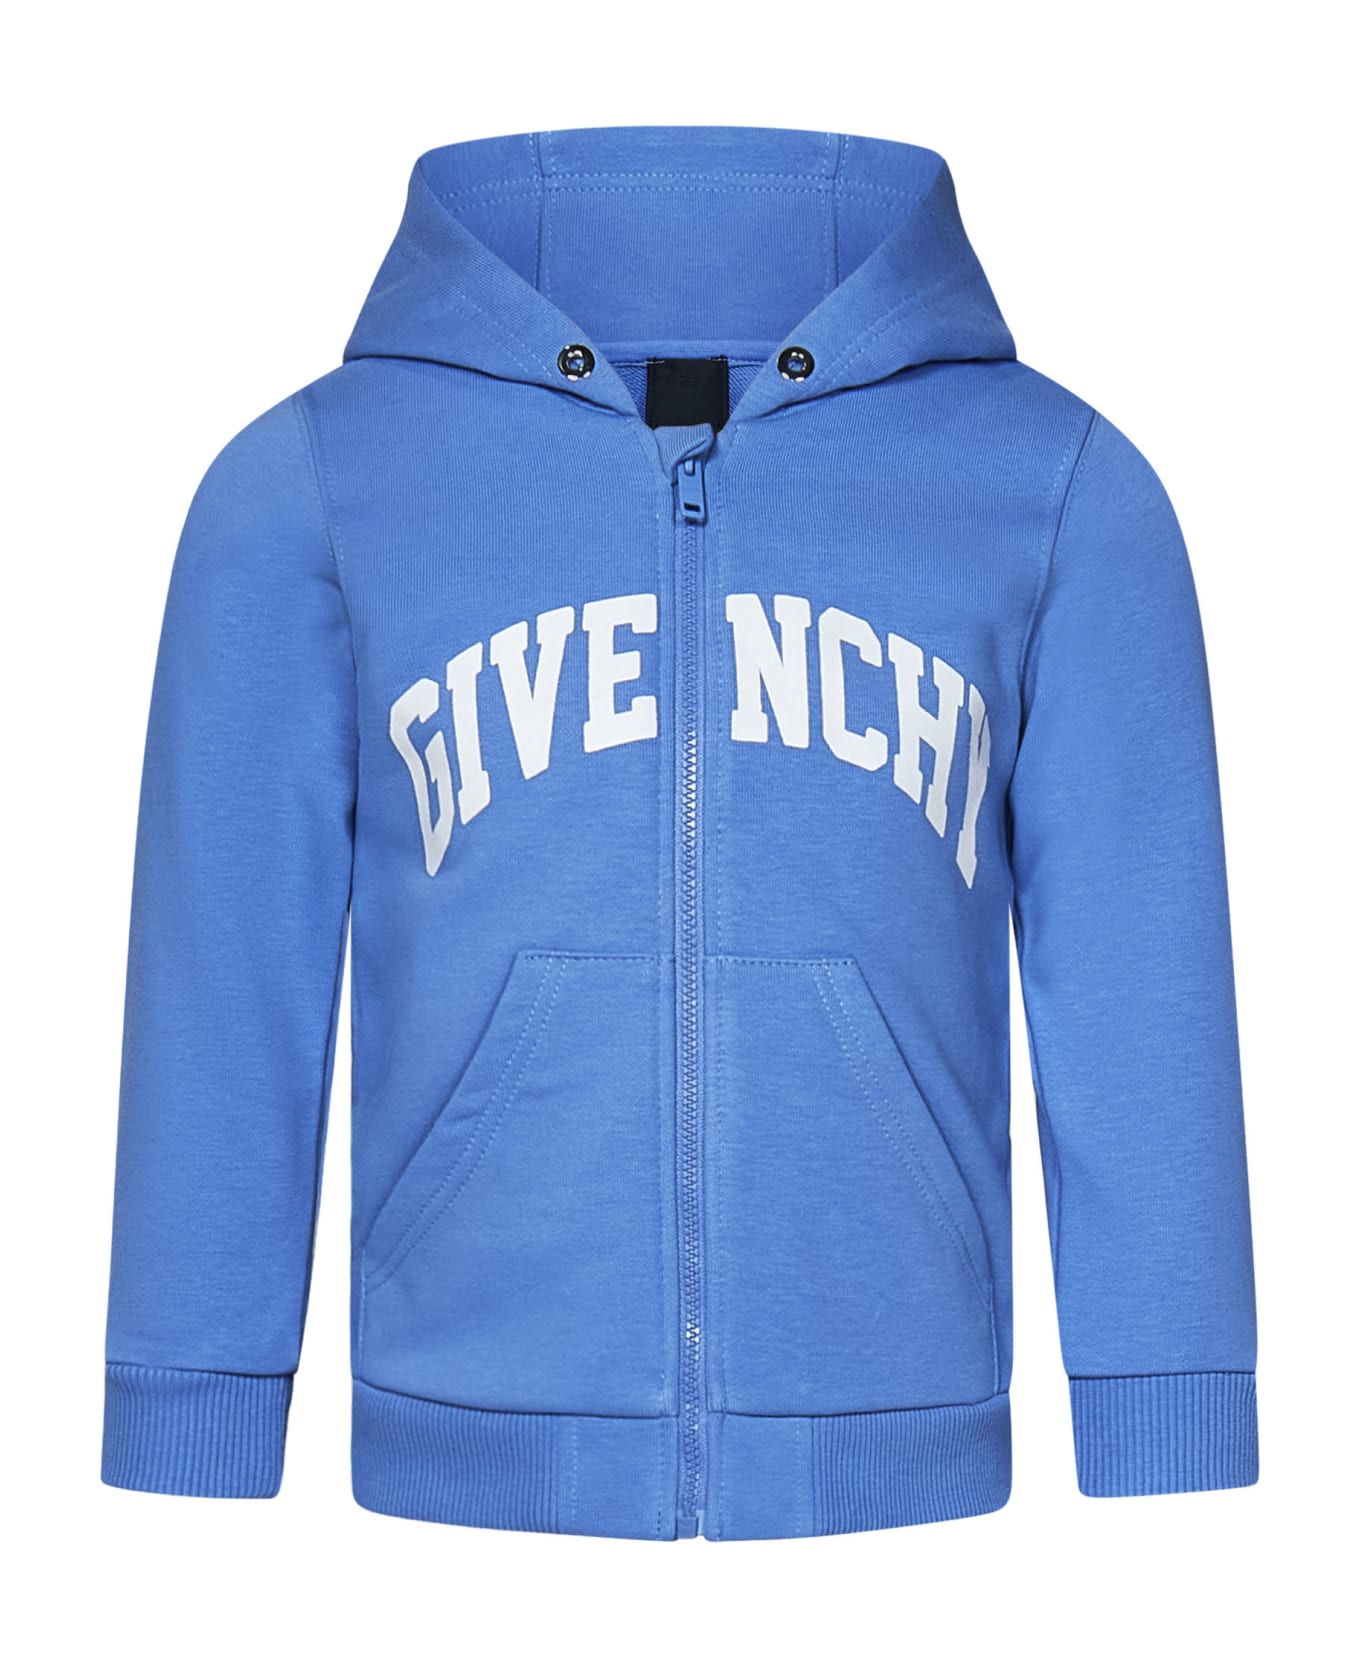 Givenchy Sweatshirt - Light blue